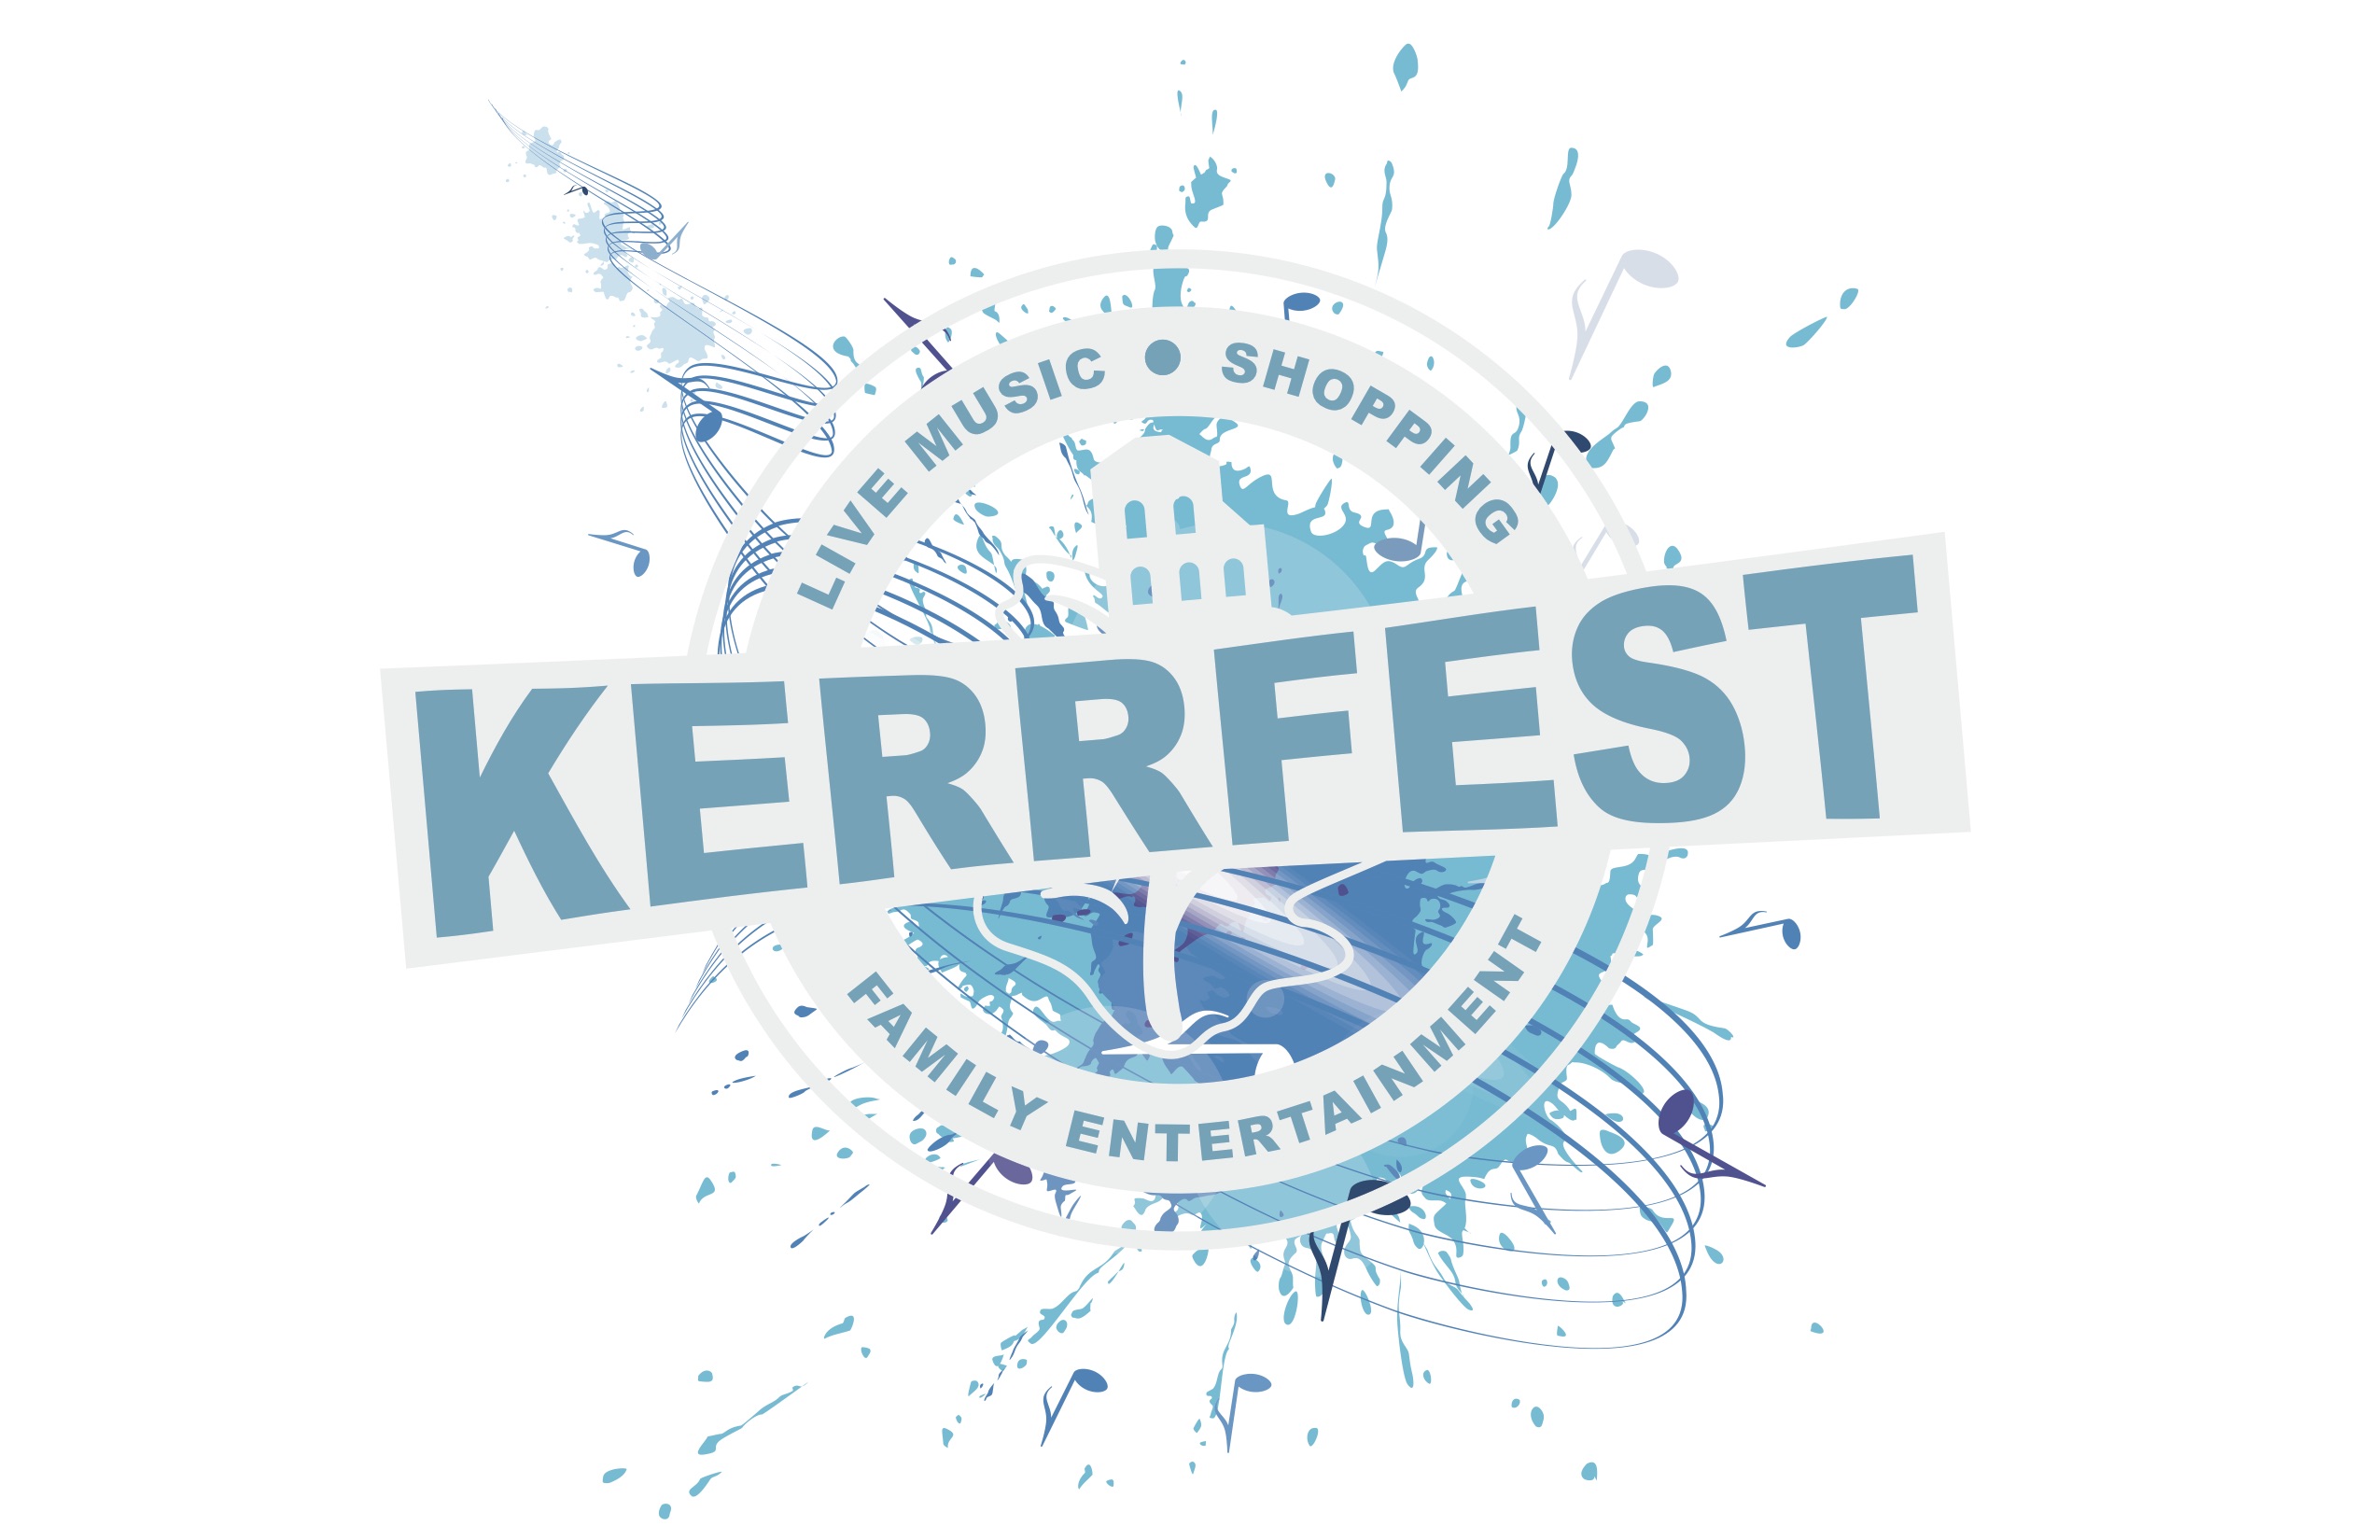 5th Annual Kerrfest September 7-9 Information